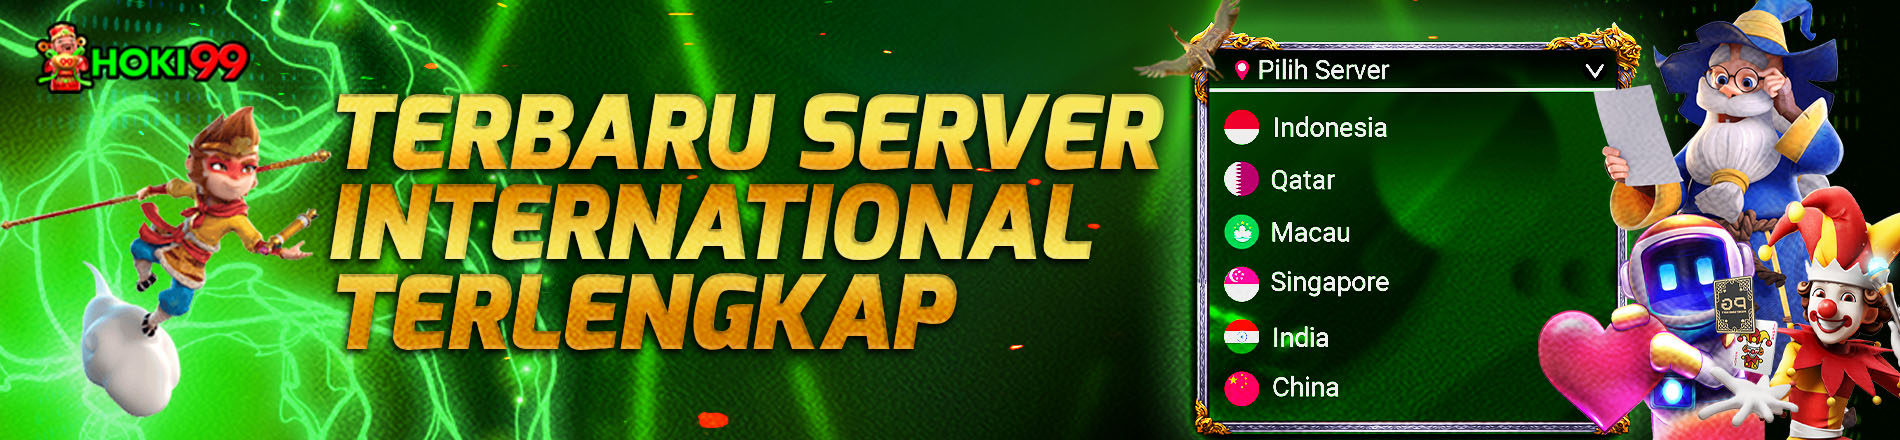 Server International